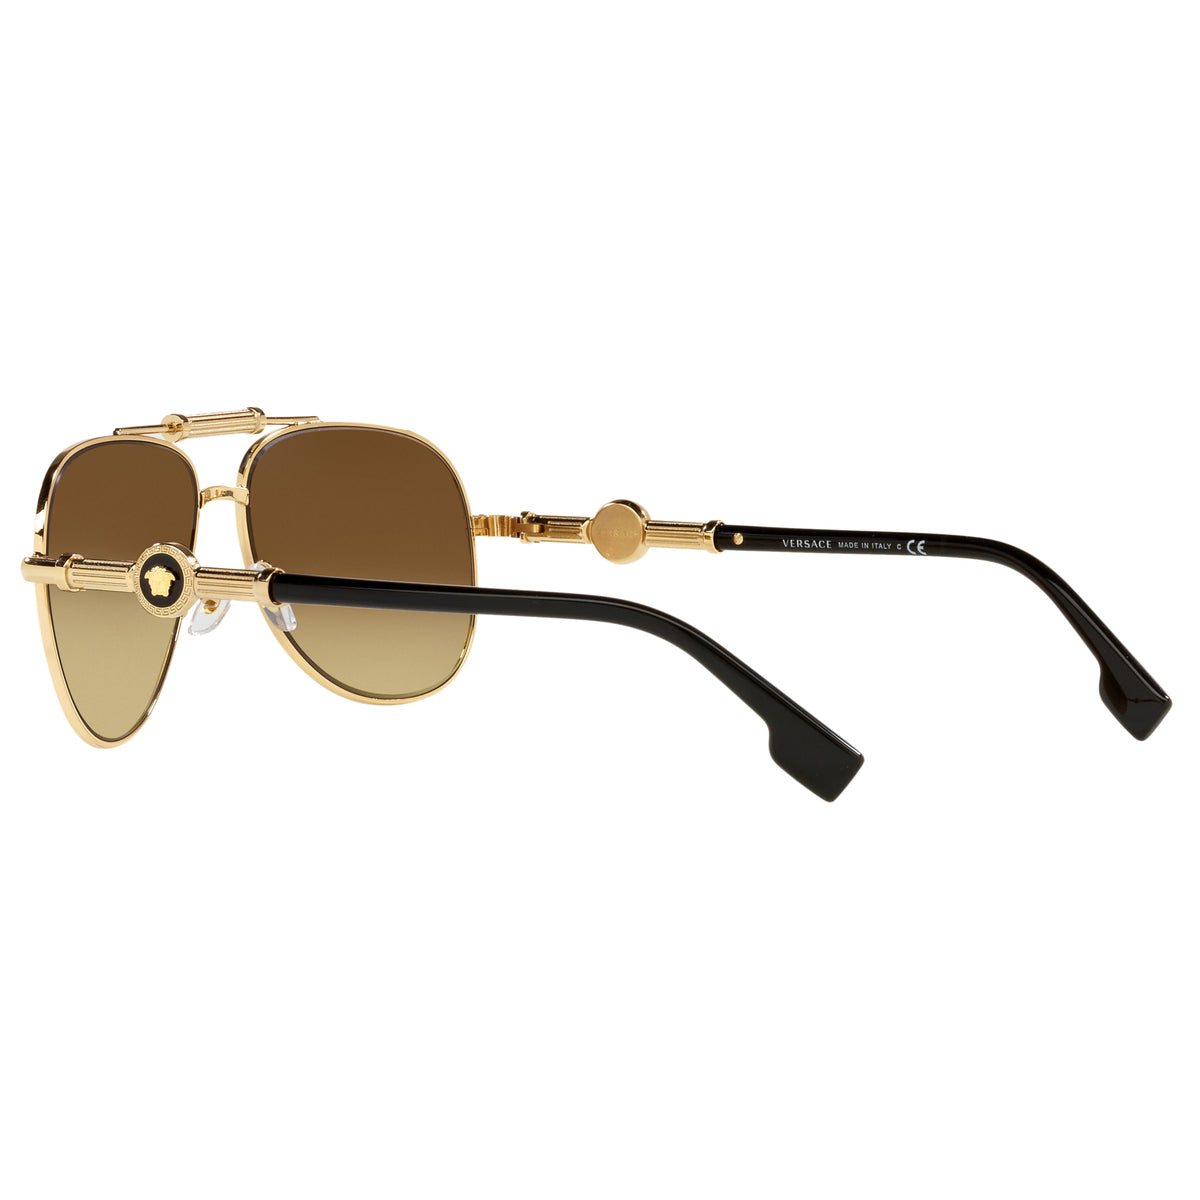 Versace 0VE2236 147713 59 (VER7) Unisex Gold Sunglasses